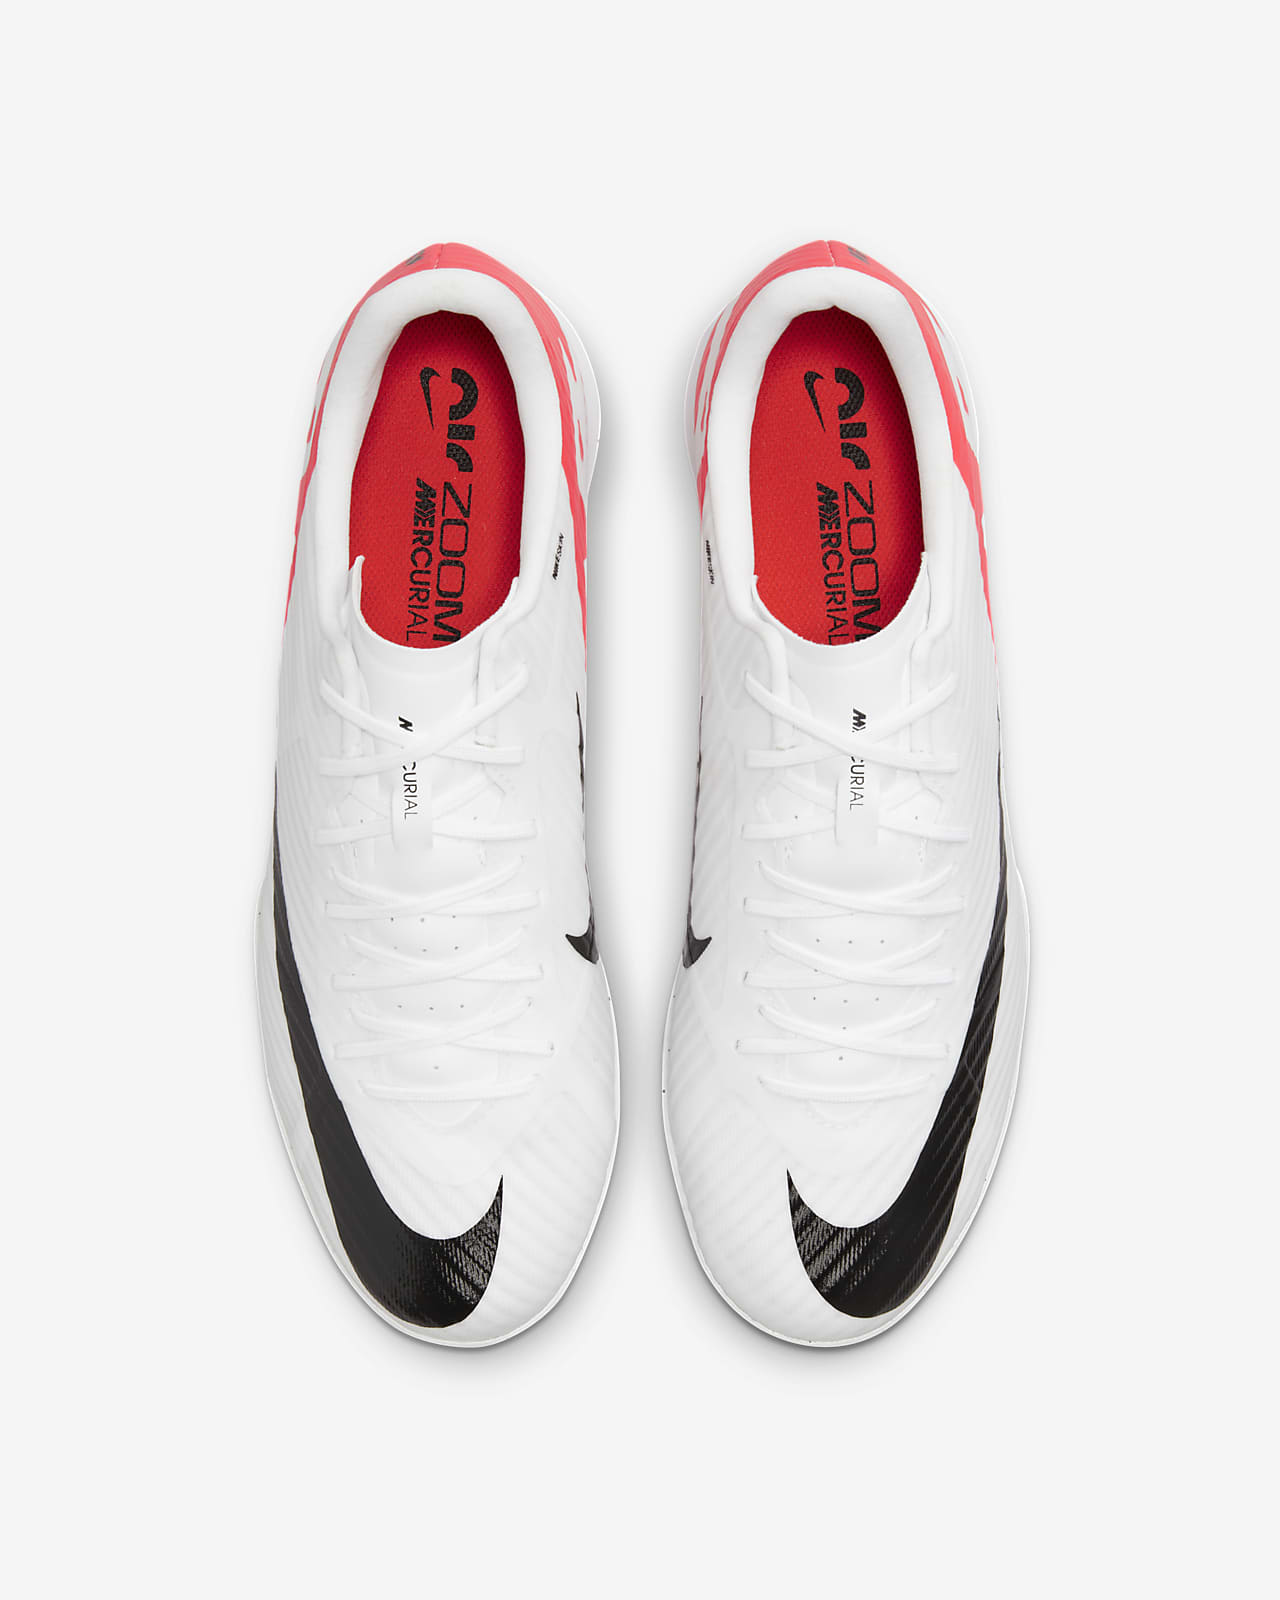 Nike Mercurial Vapor Academy Soccer Shoes.